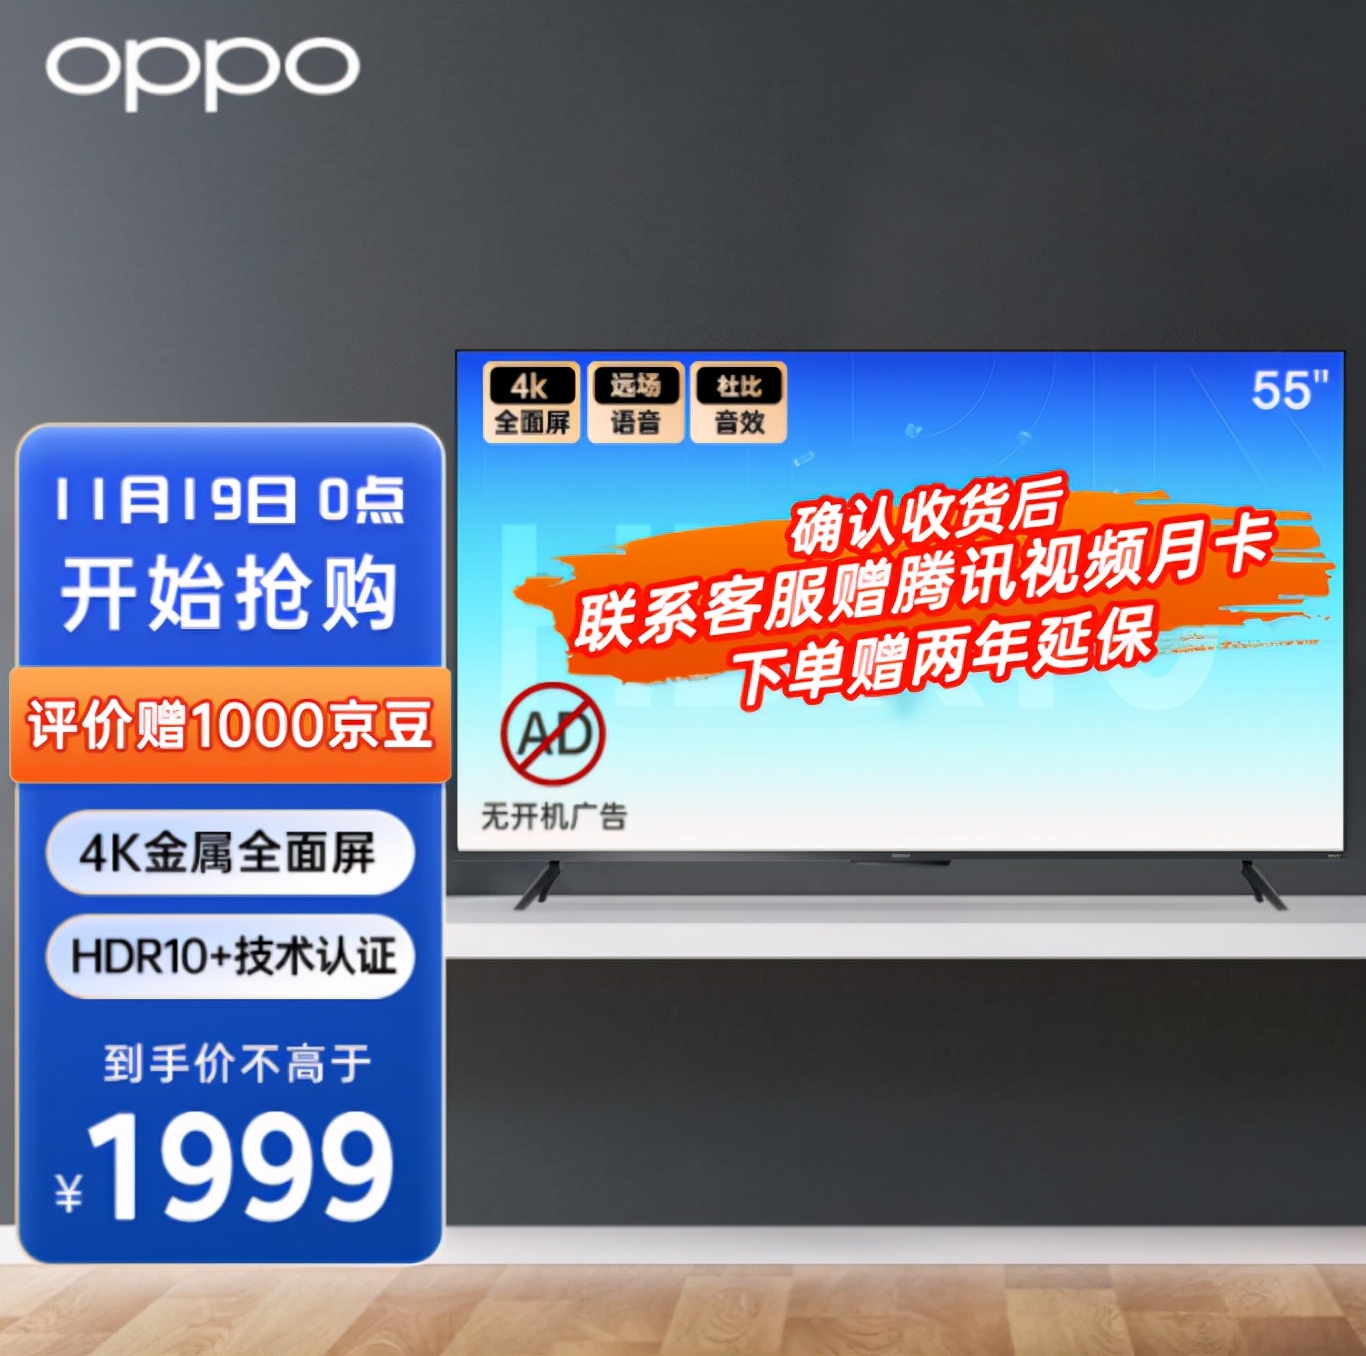 HDR10＋认证＆开机无广告，55英寸OPPO智能电视K9迎好价：1999元